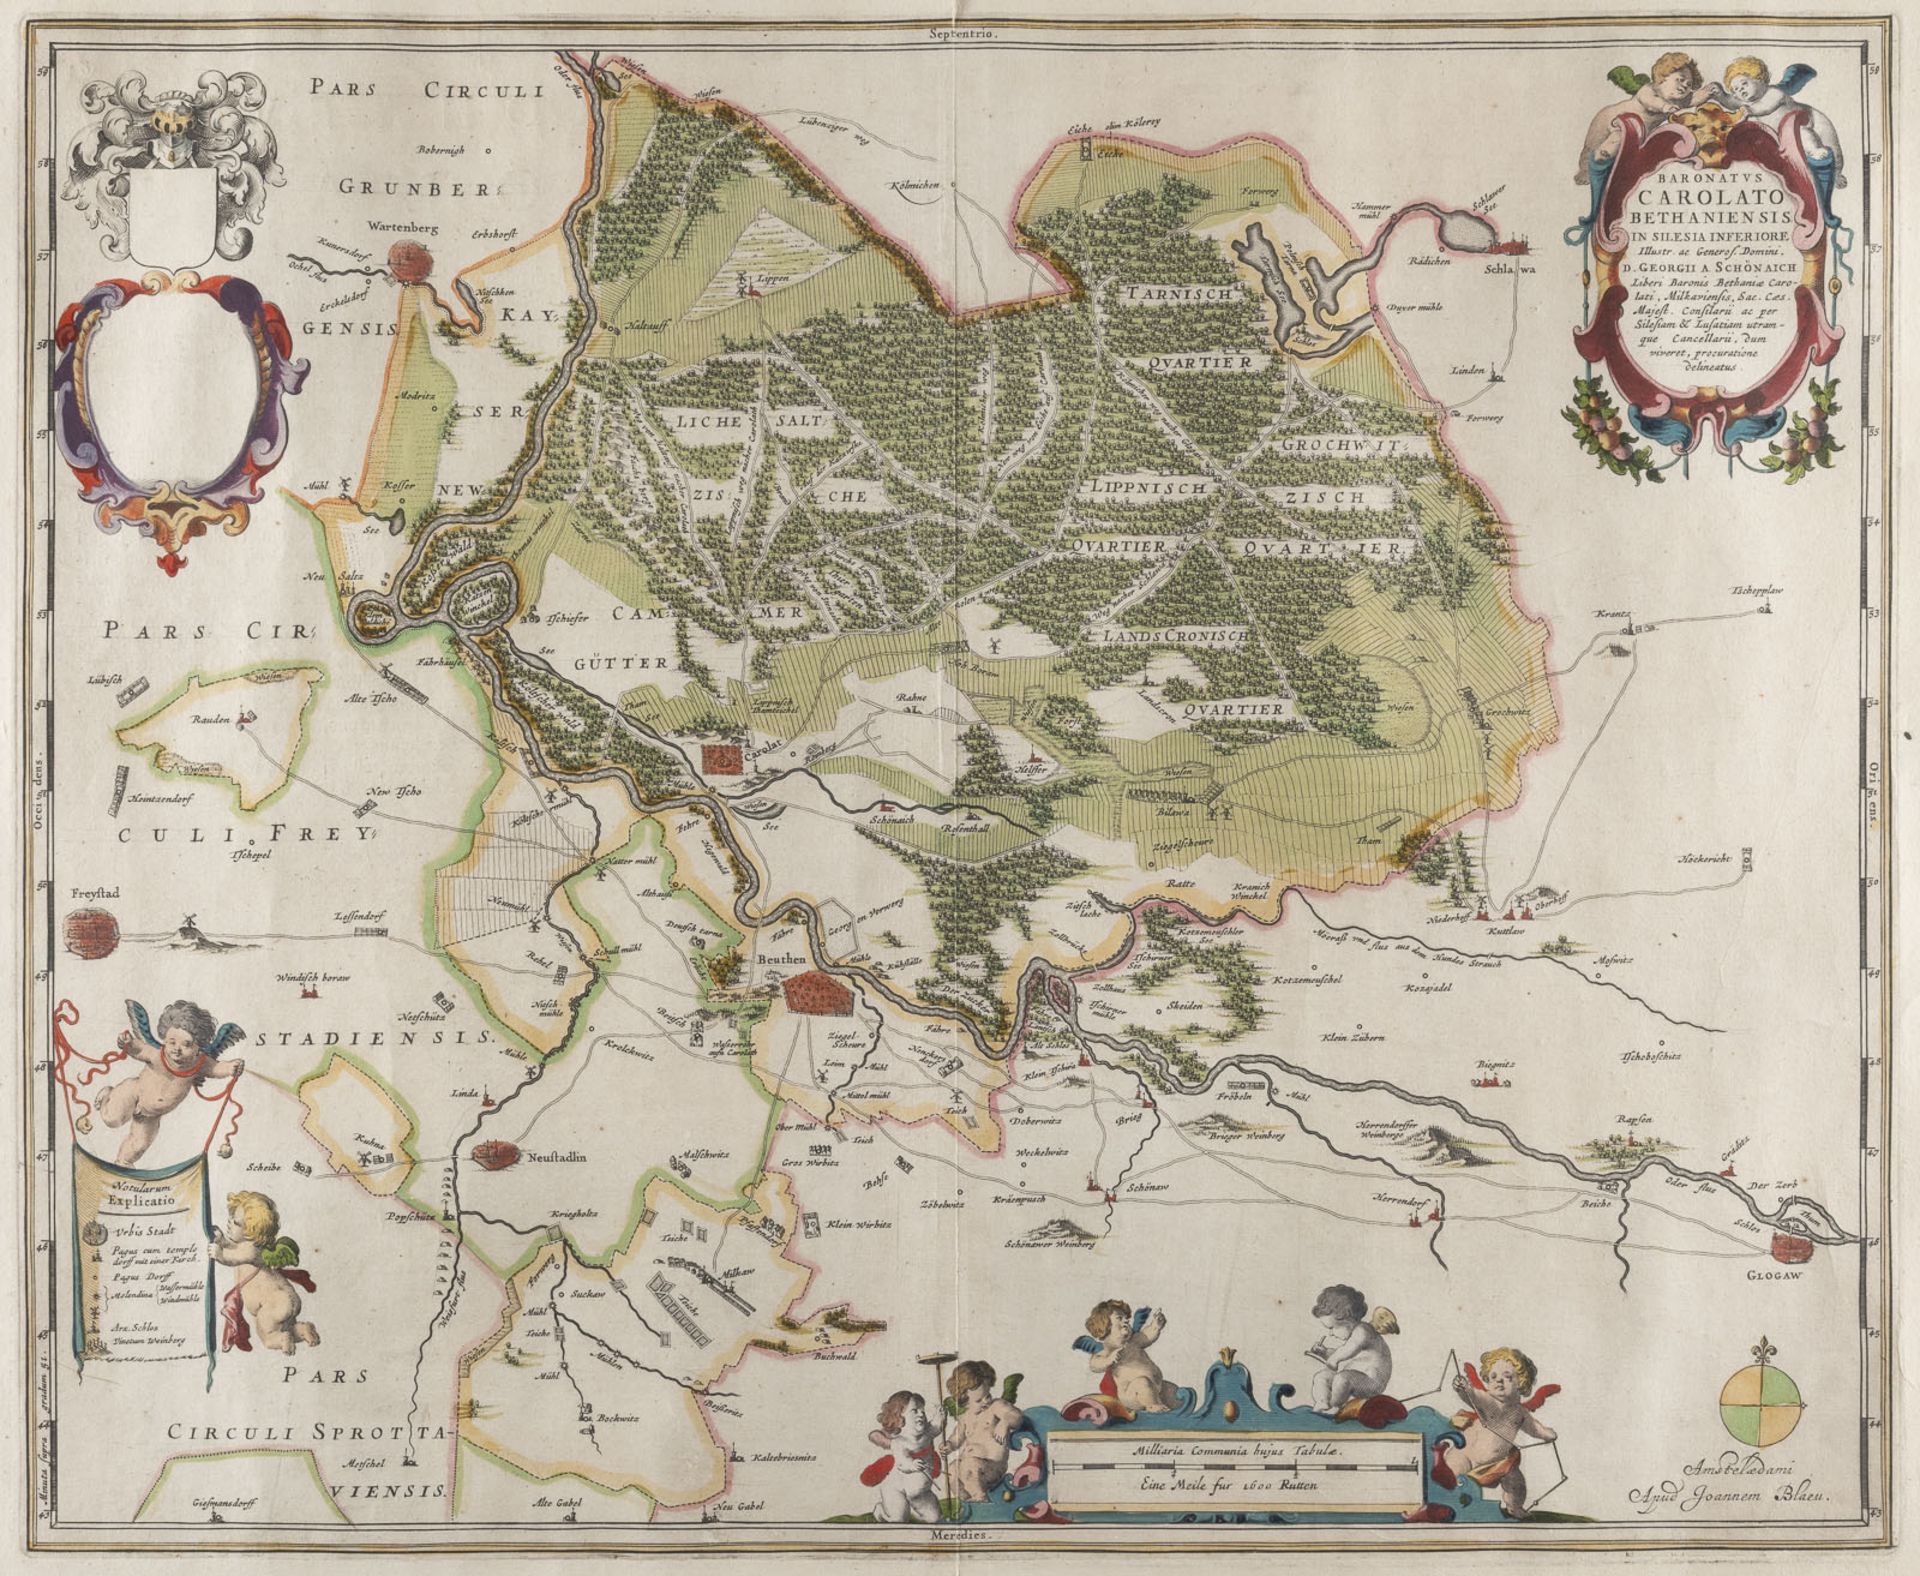 'BARONATUS CAROLATO BETHANIENSIS IN SILESIA INFERIORE' (BARONIE BEUTHEN - UM 1662)